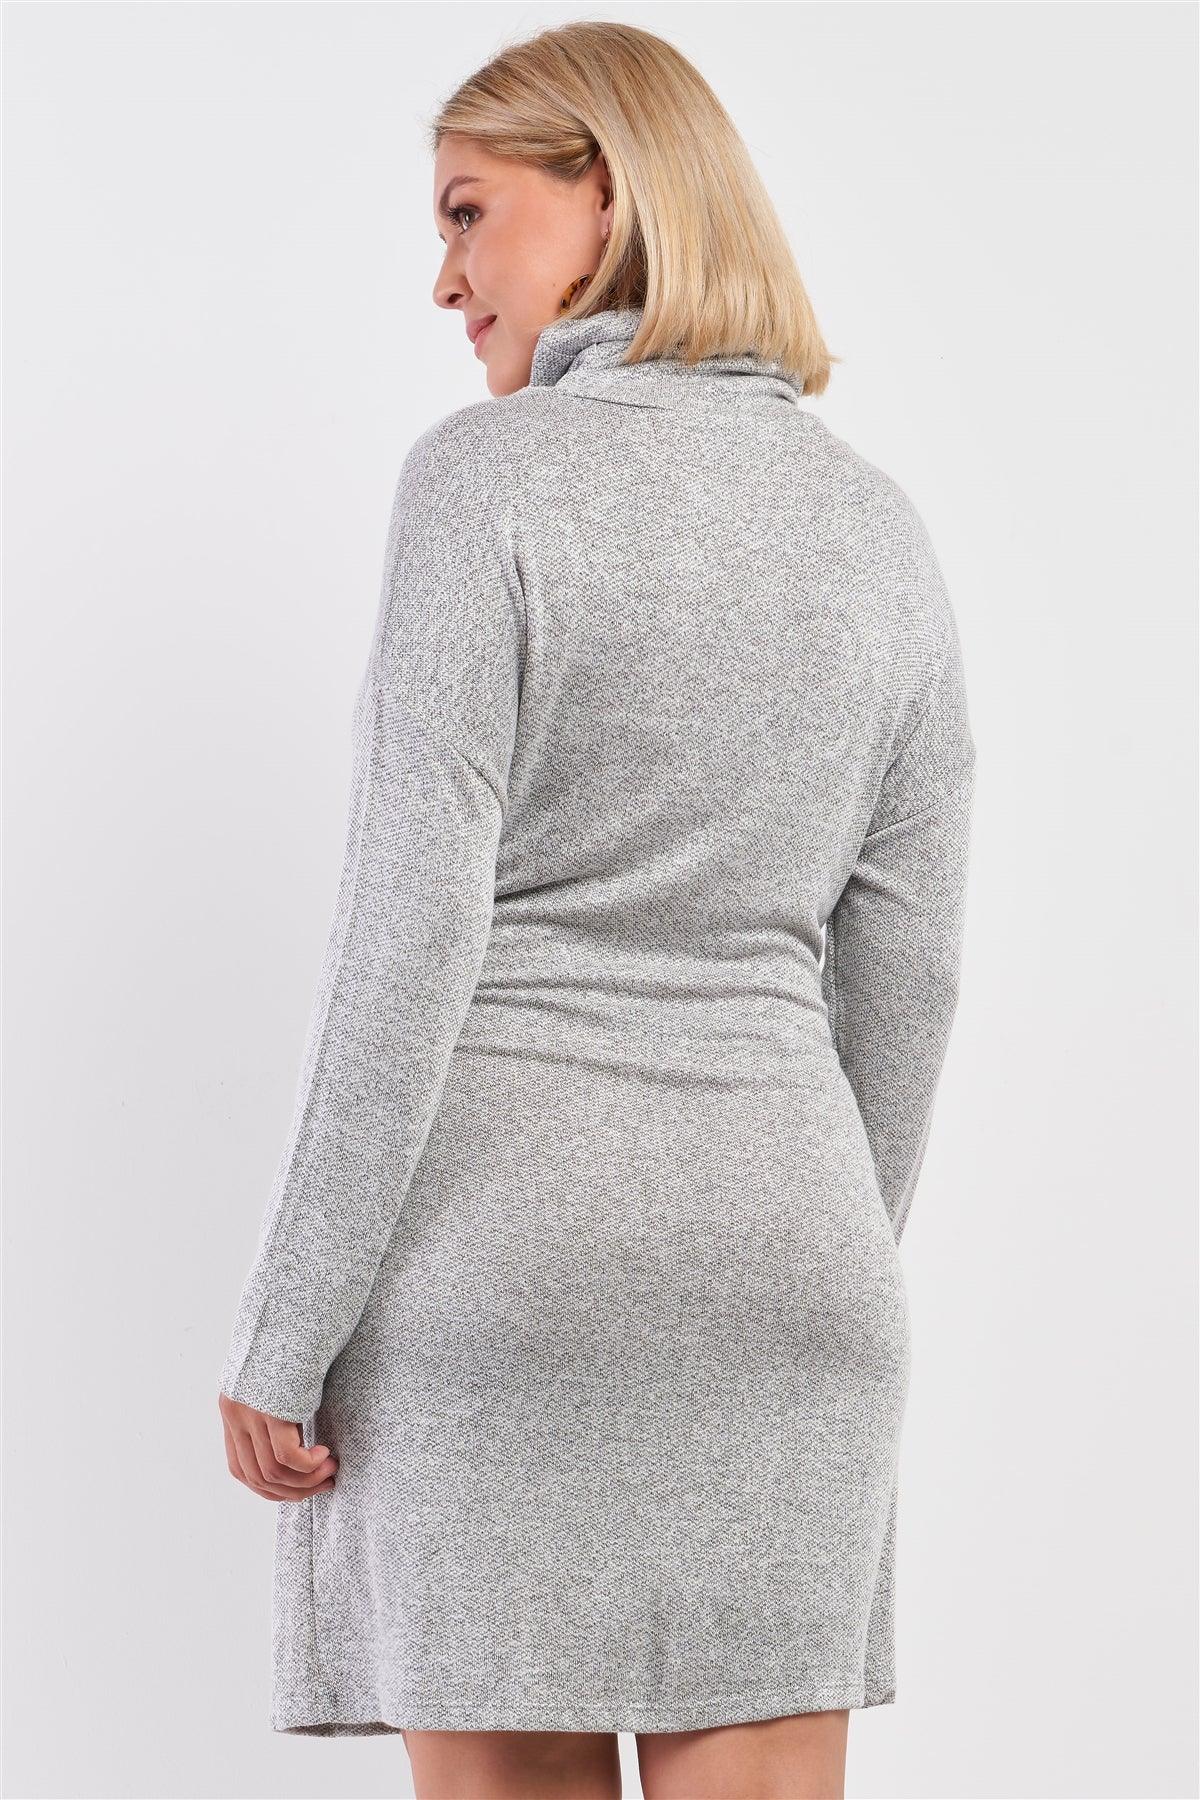 Junior Plus Heather Grey Knit Long Sleeve Turtleneck Self-Tie Waist Detail Mini Sweater Dress /2-2-1-1